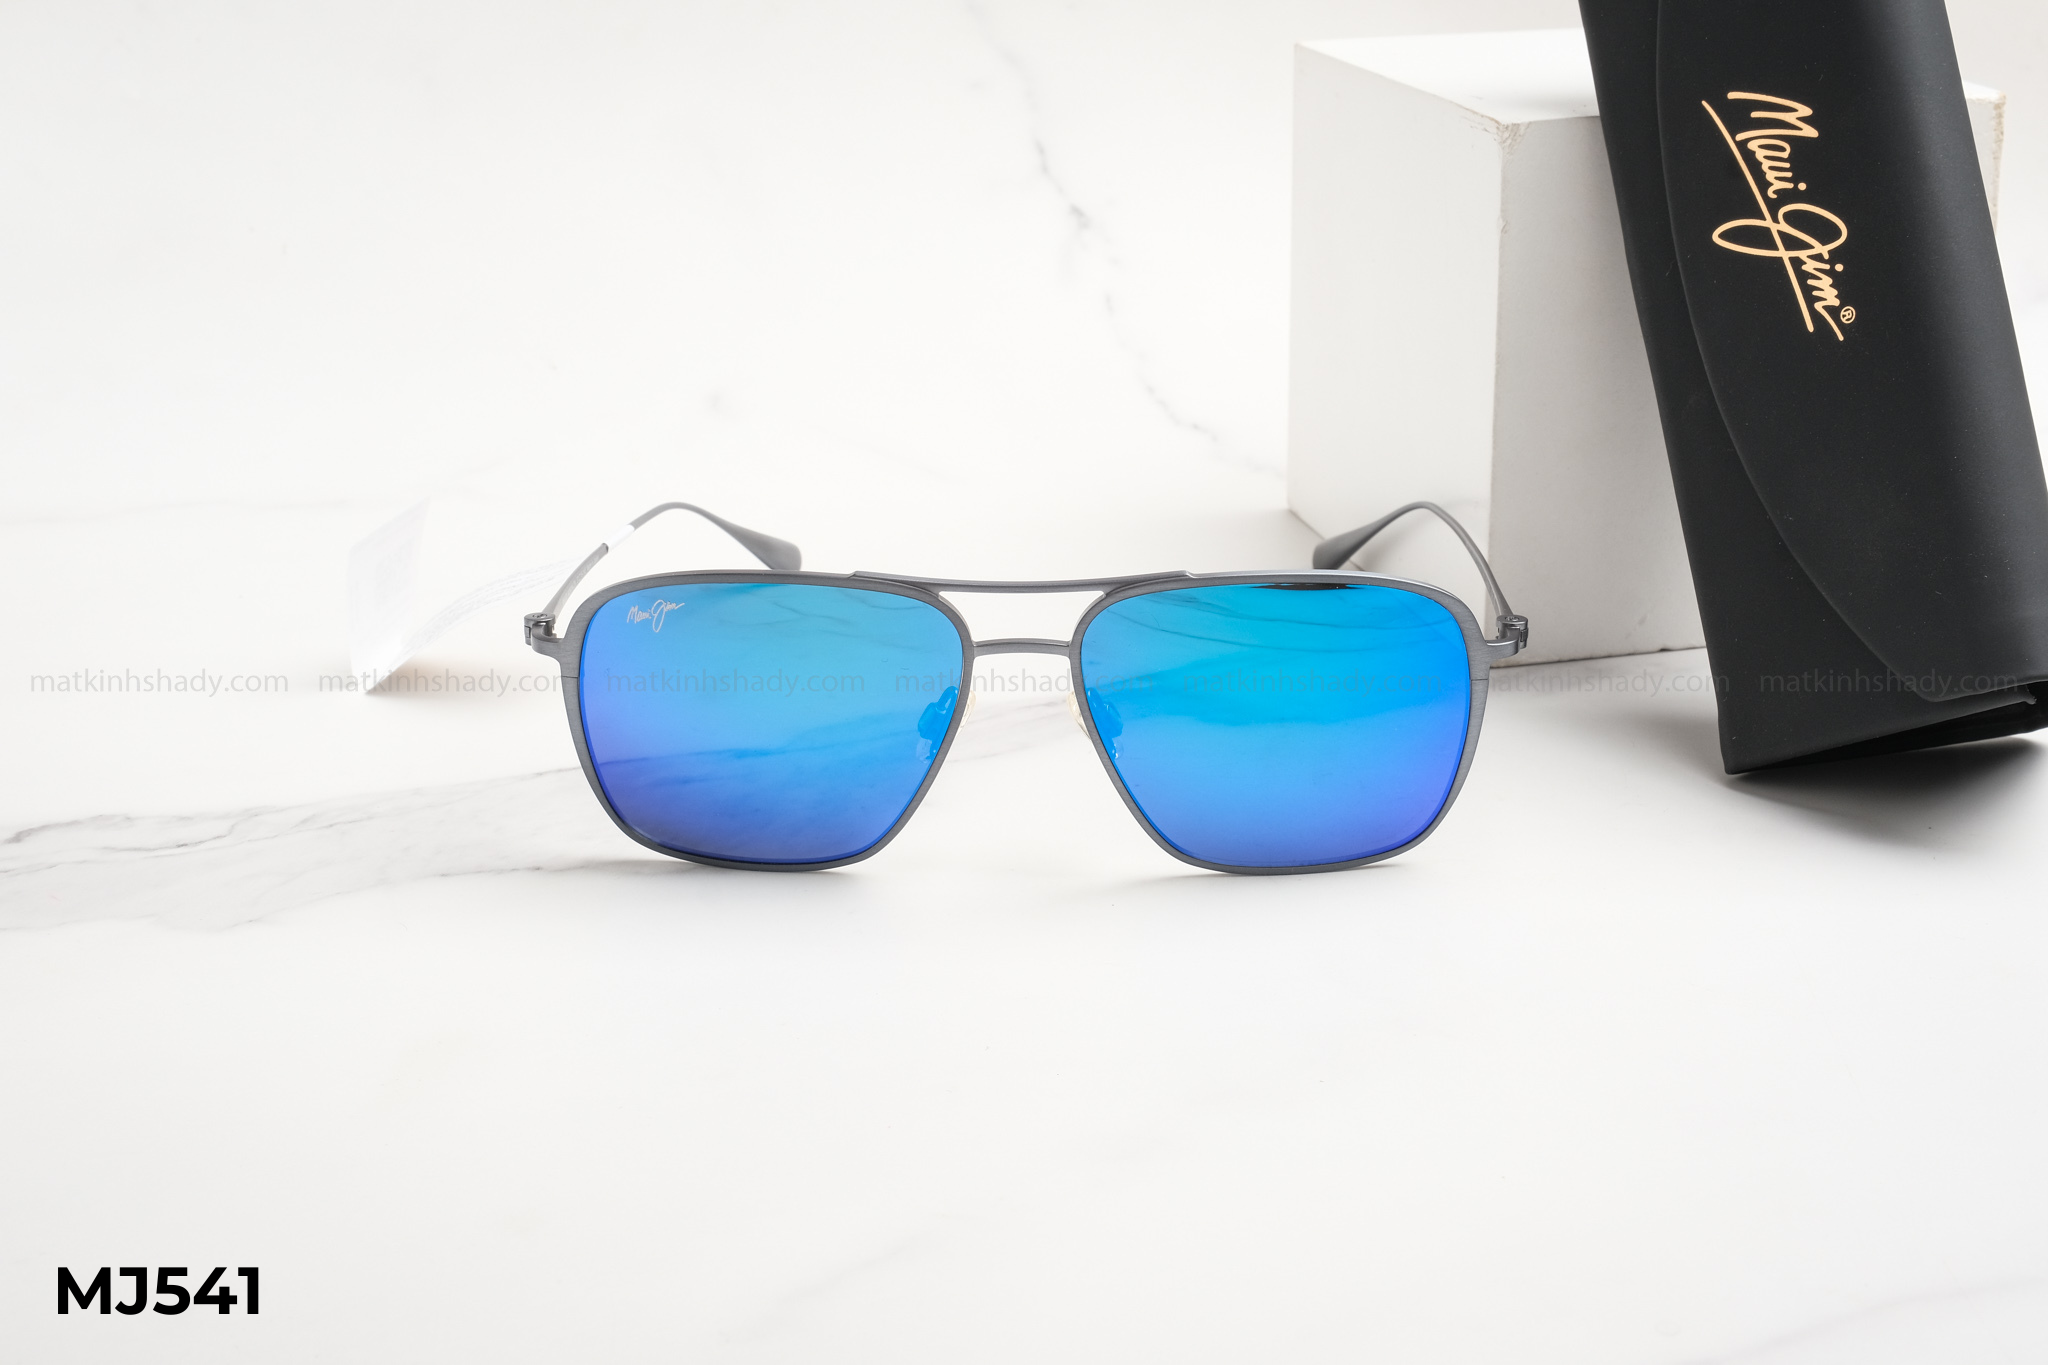  Maui Jim Eyewear - Sunglasses - MJ541 